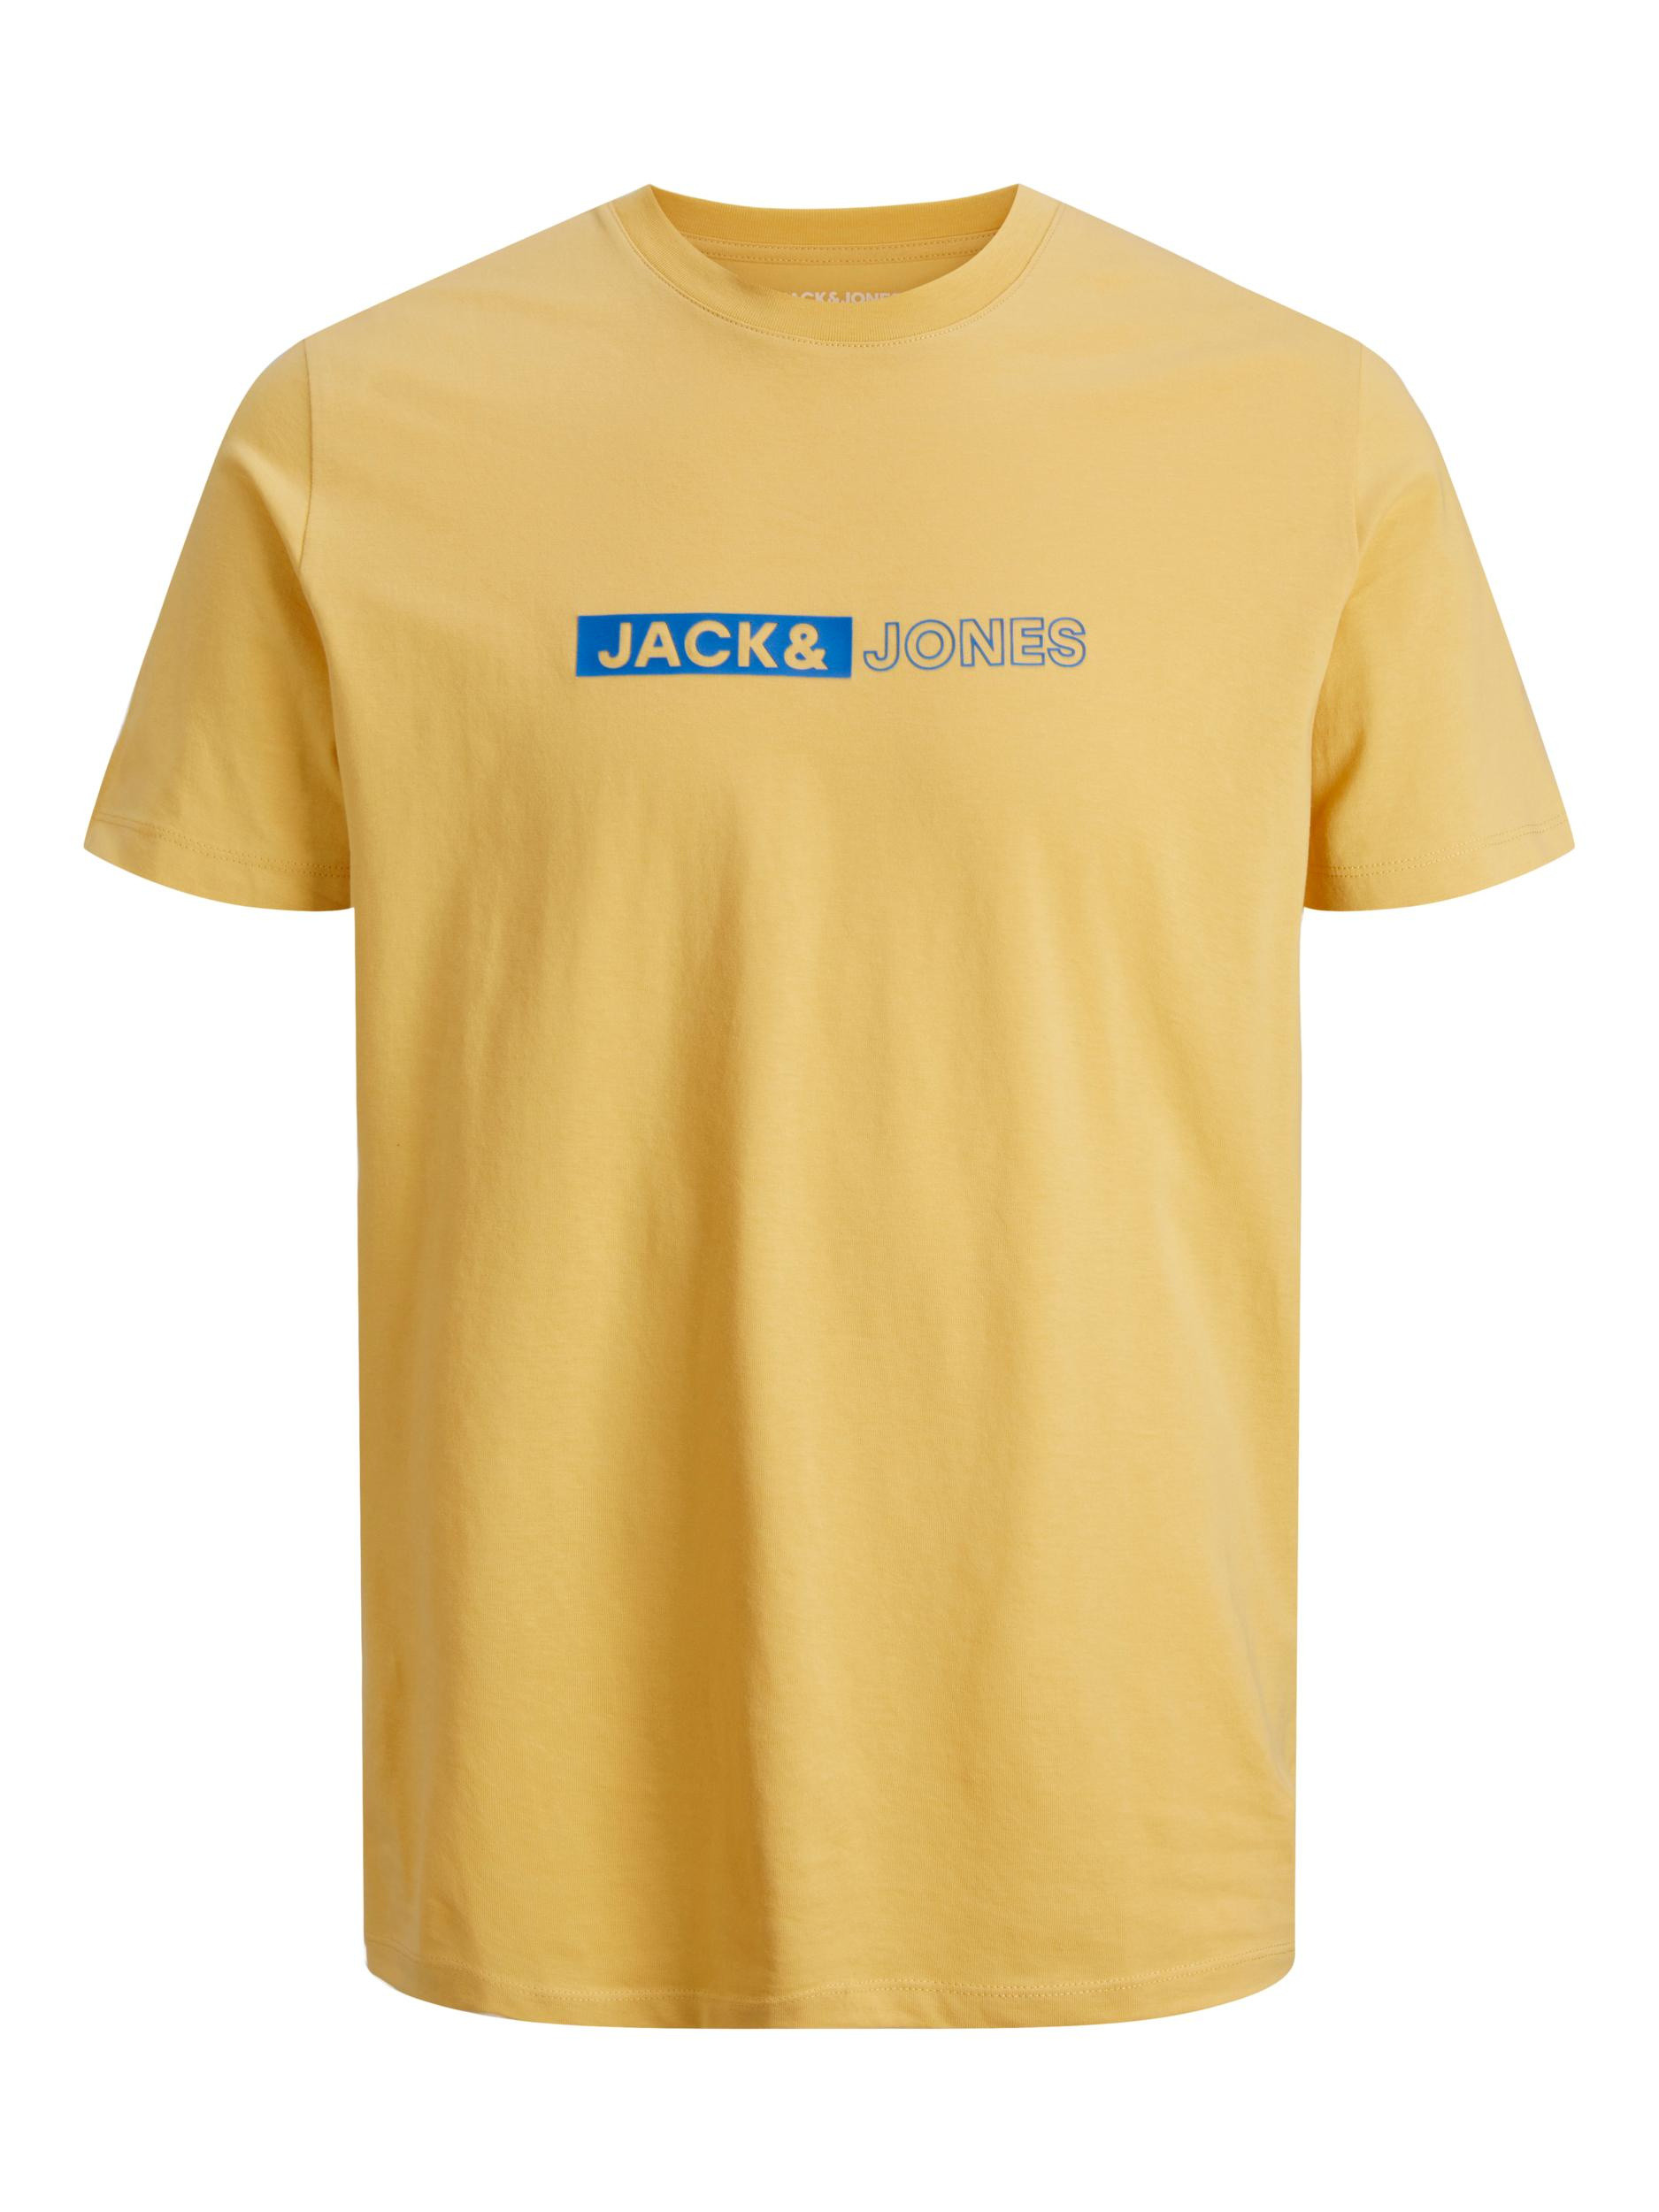 Jack & Jones - Regular fit cotton T-shirt, Yellow, large image number 0